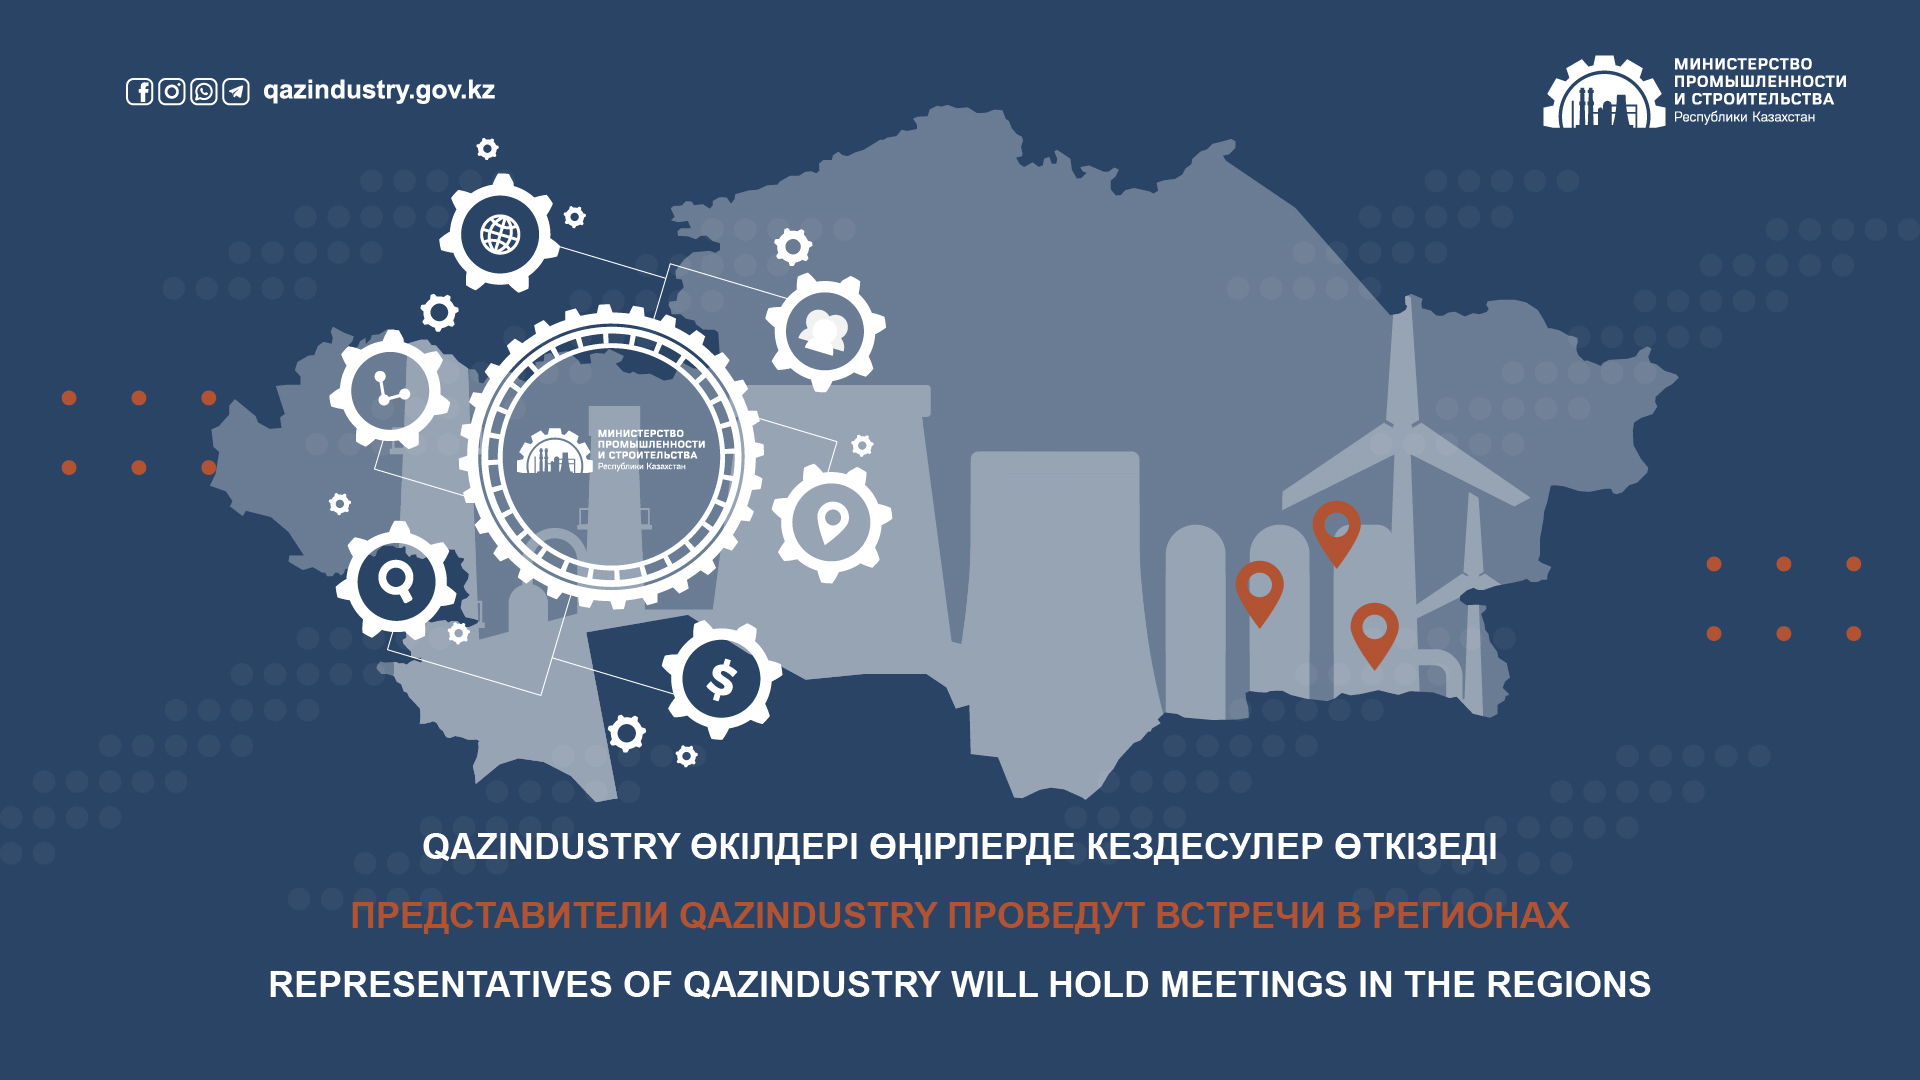 Представители Qazindustry проведут встречи в регионах